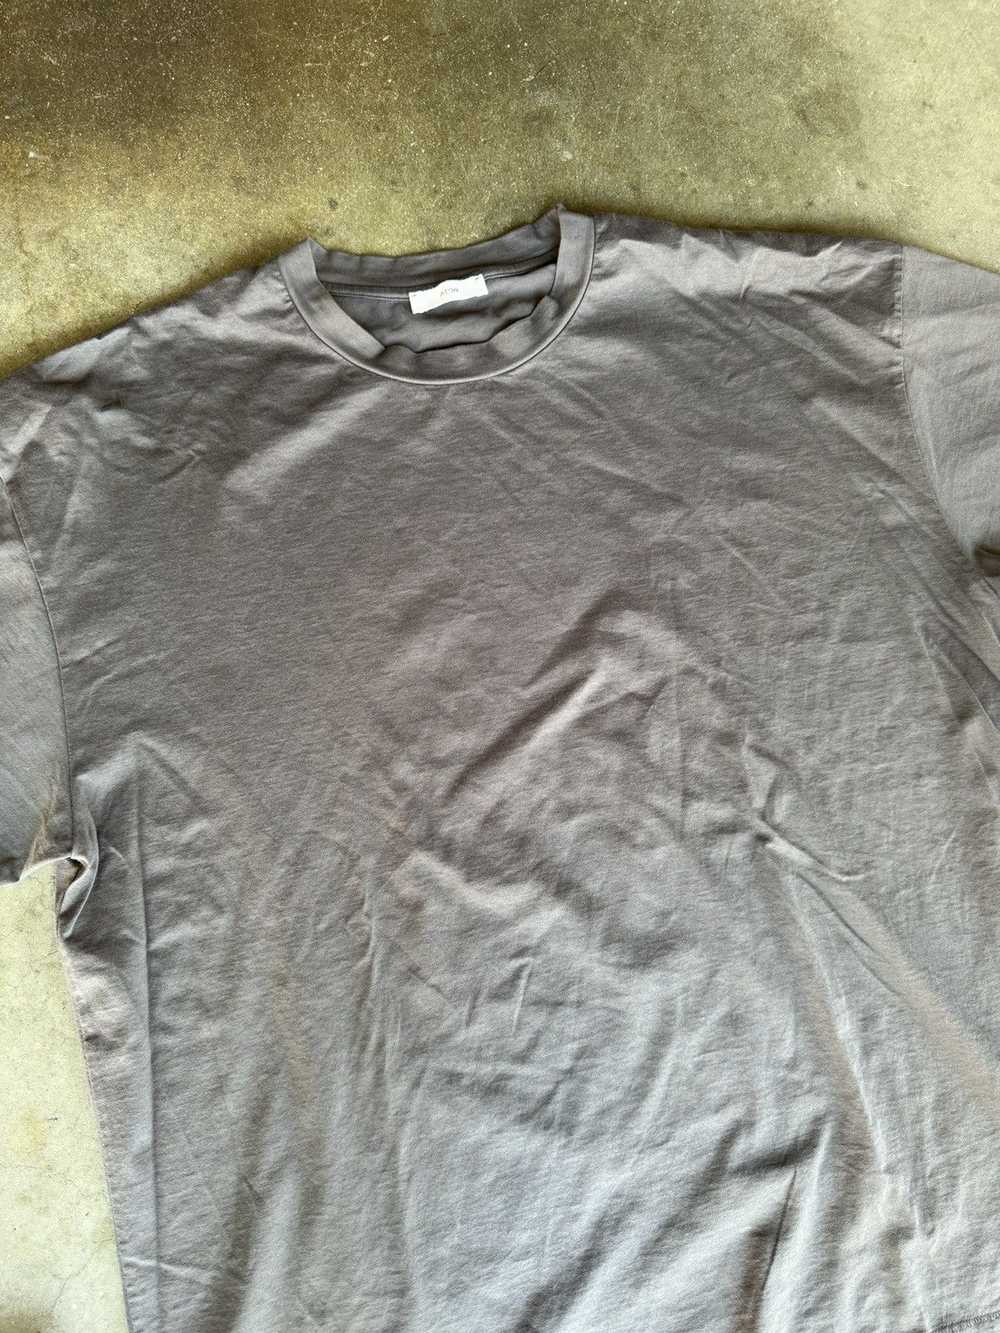 ATON Aton Single Stitched Tee Shirt Charcoal - image 2